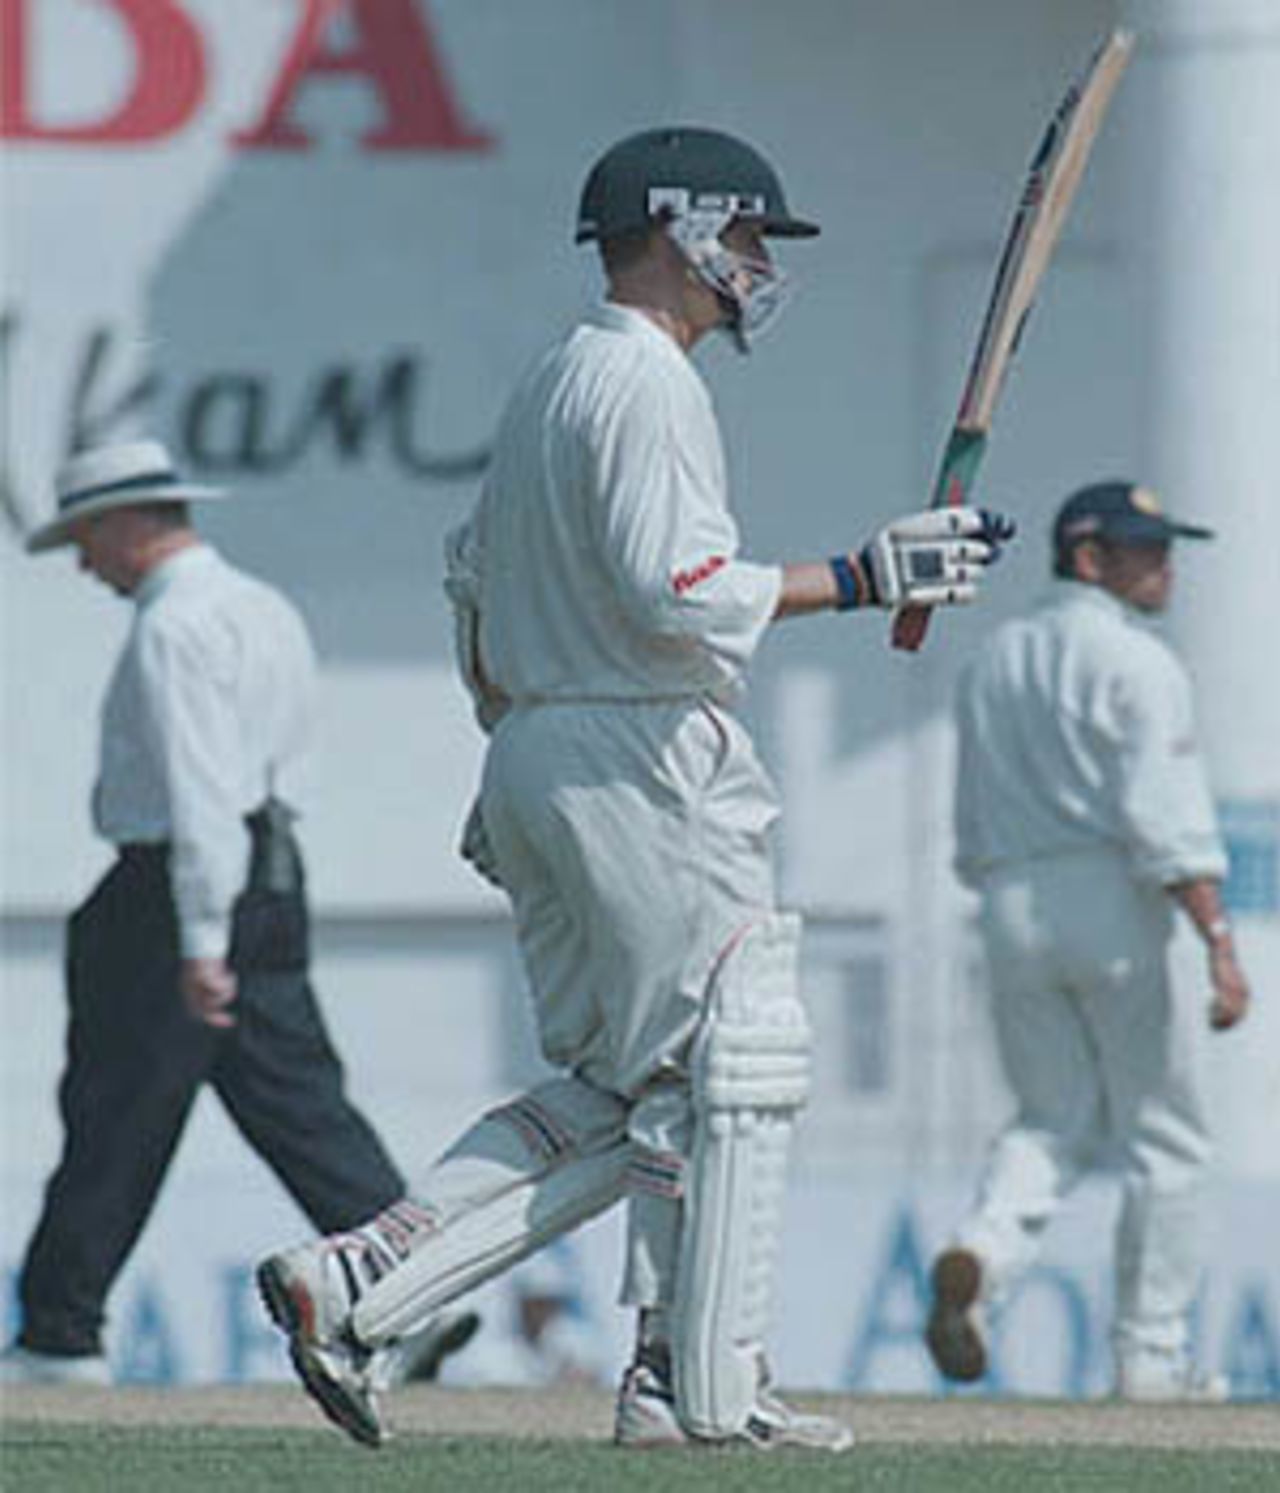 Carlisle acknowledges the crowd with a raised bat after his half-century, Zimbabwe in India, 2000/01, 2nd Test, India v Zimbabwe, Vidarbha C.A. Ground, Nagpur, 25-29 November 2000 (Day 3).